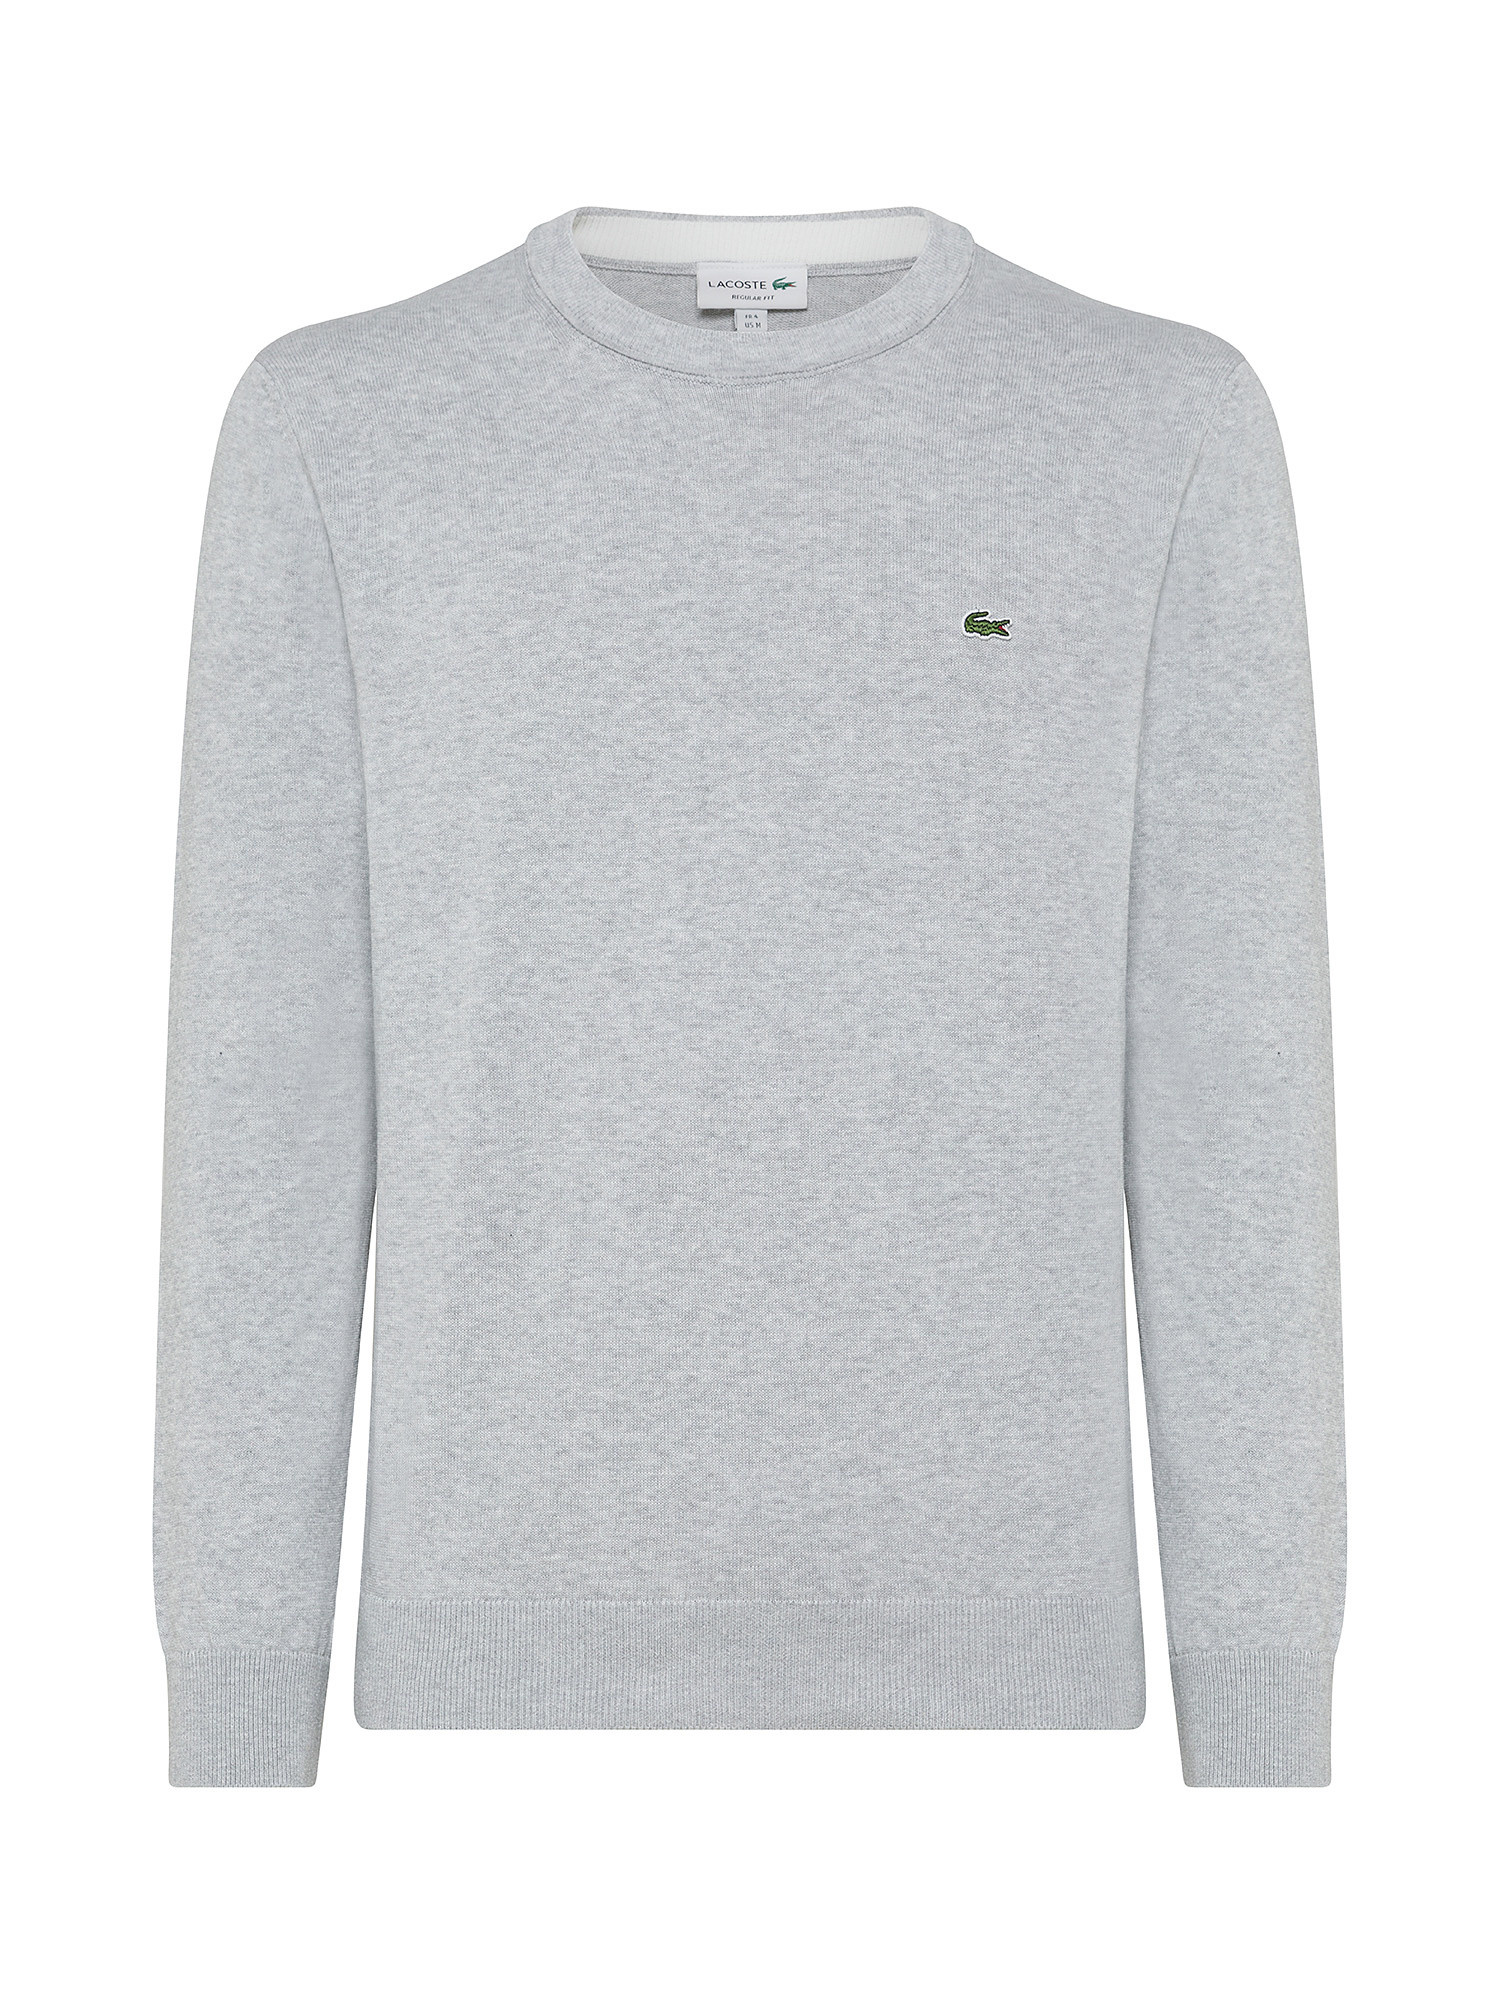 Lacoste - Cotton crewneck sweater, Grey, large image number 0